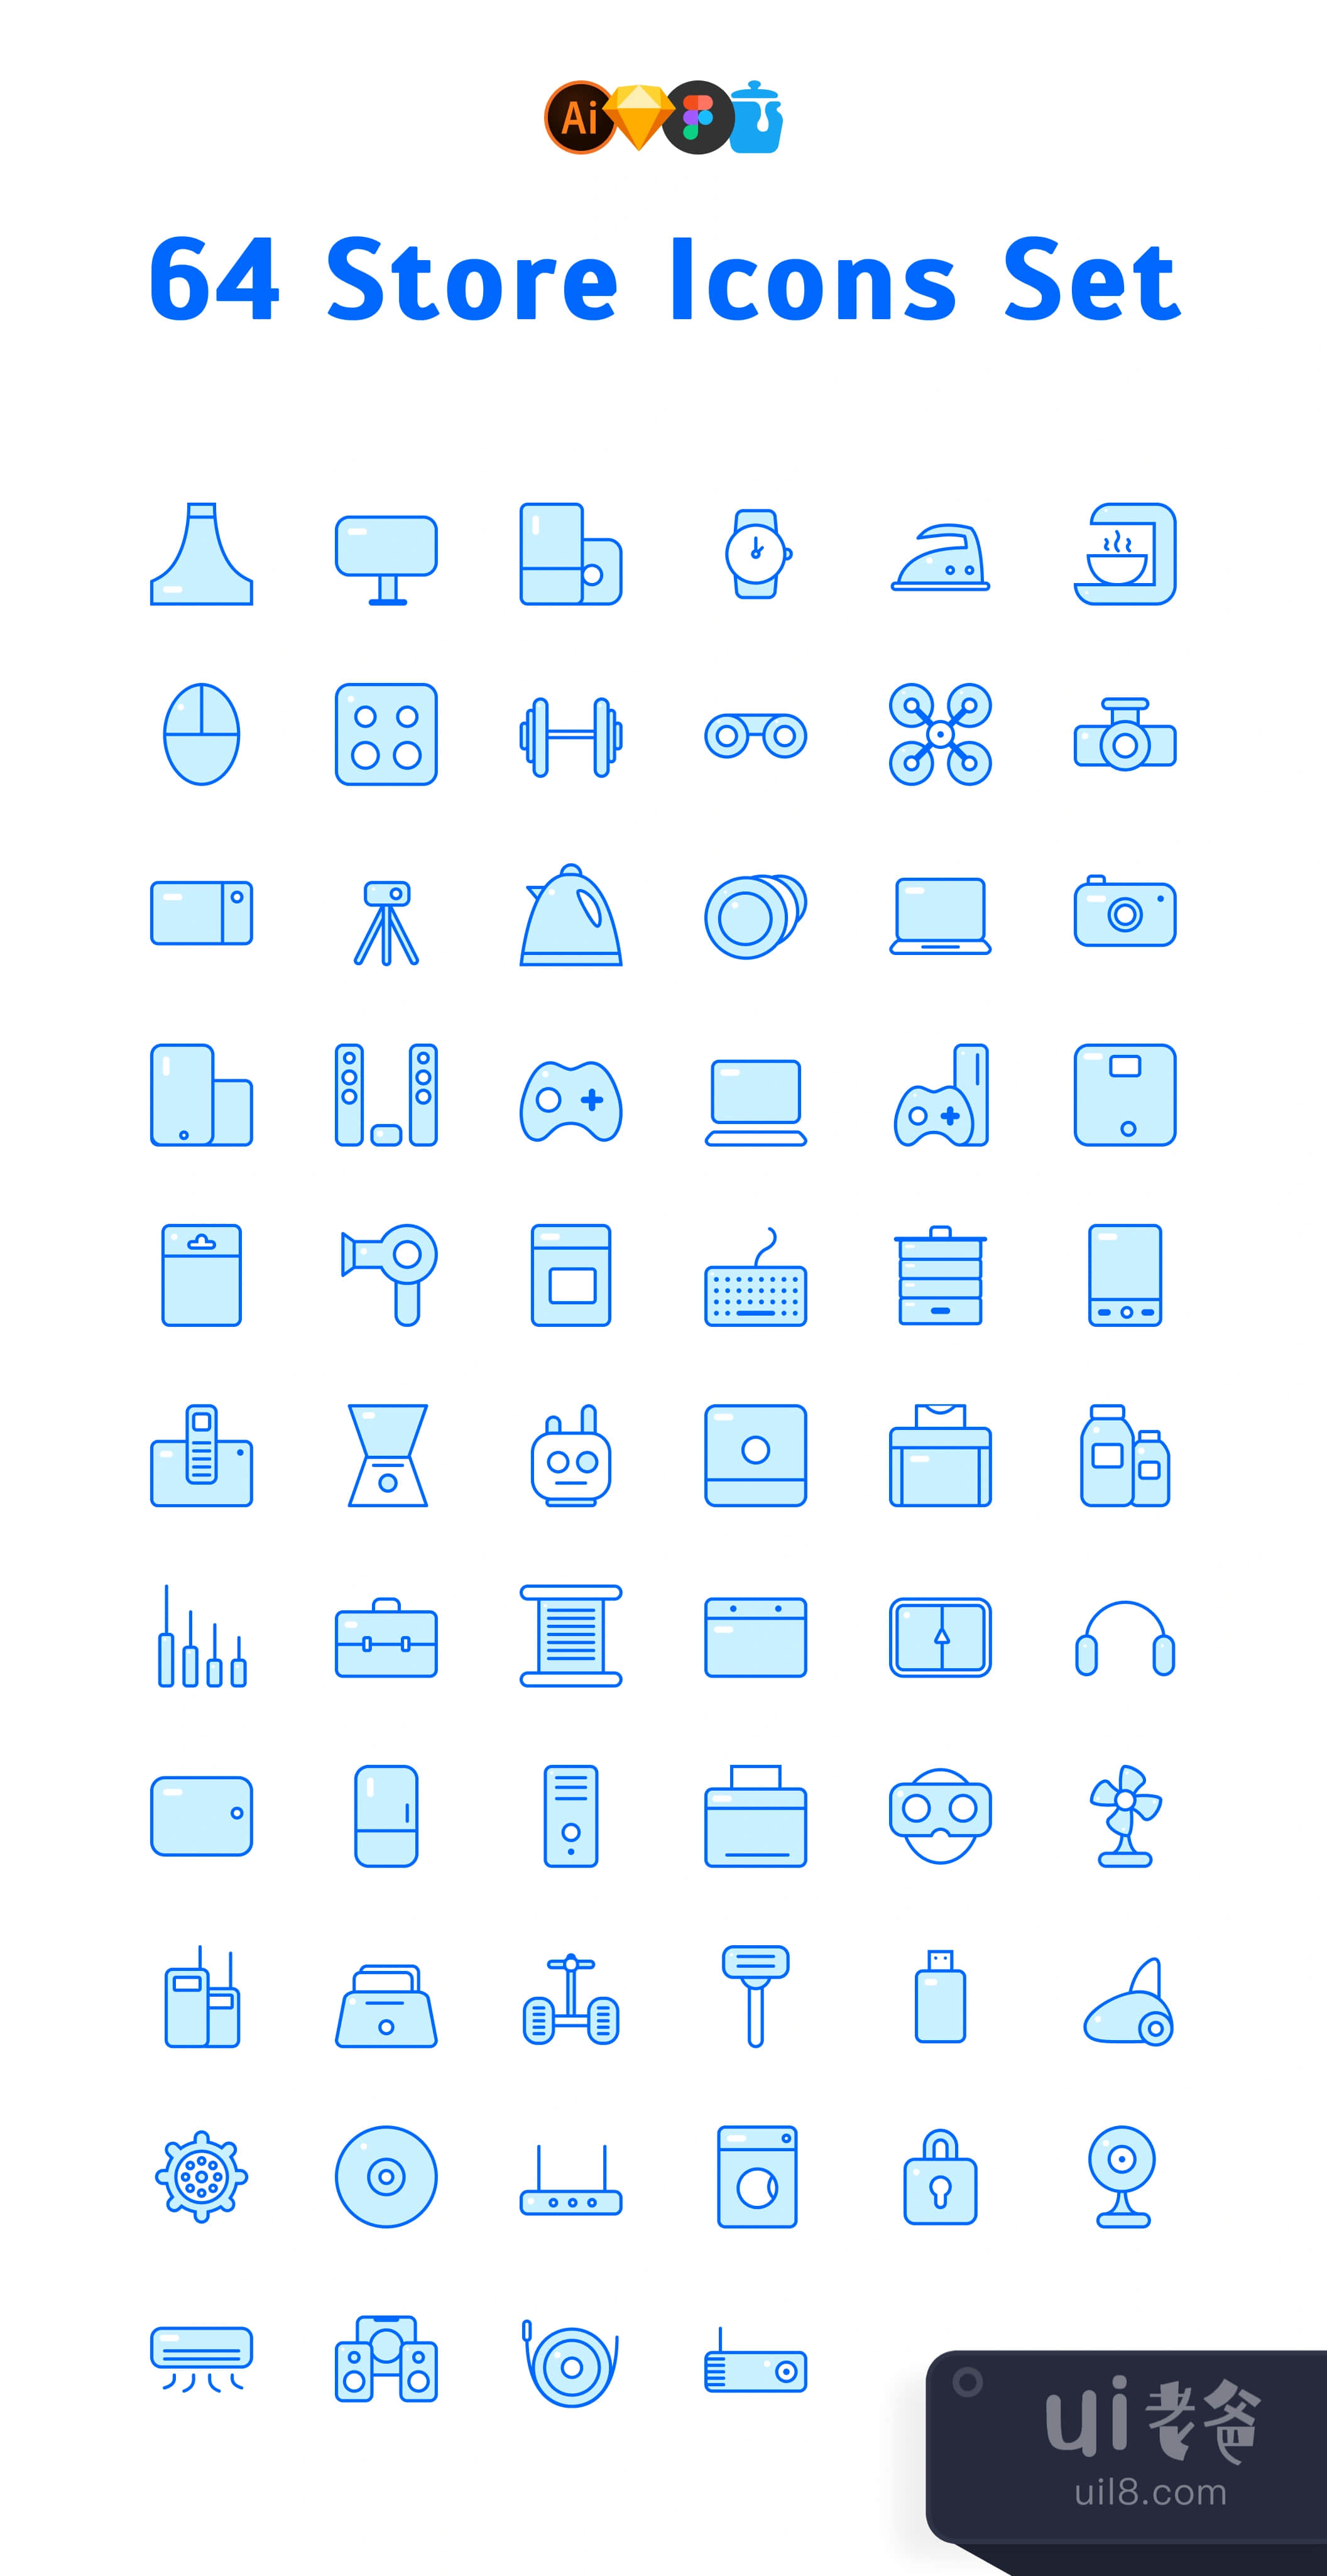 商店图标集 (Store Icons Set)插图